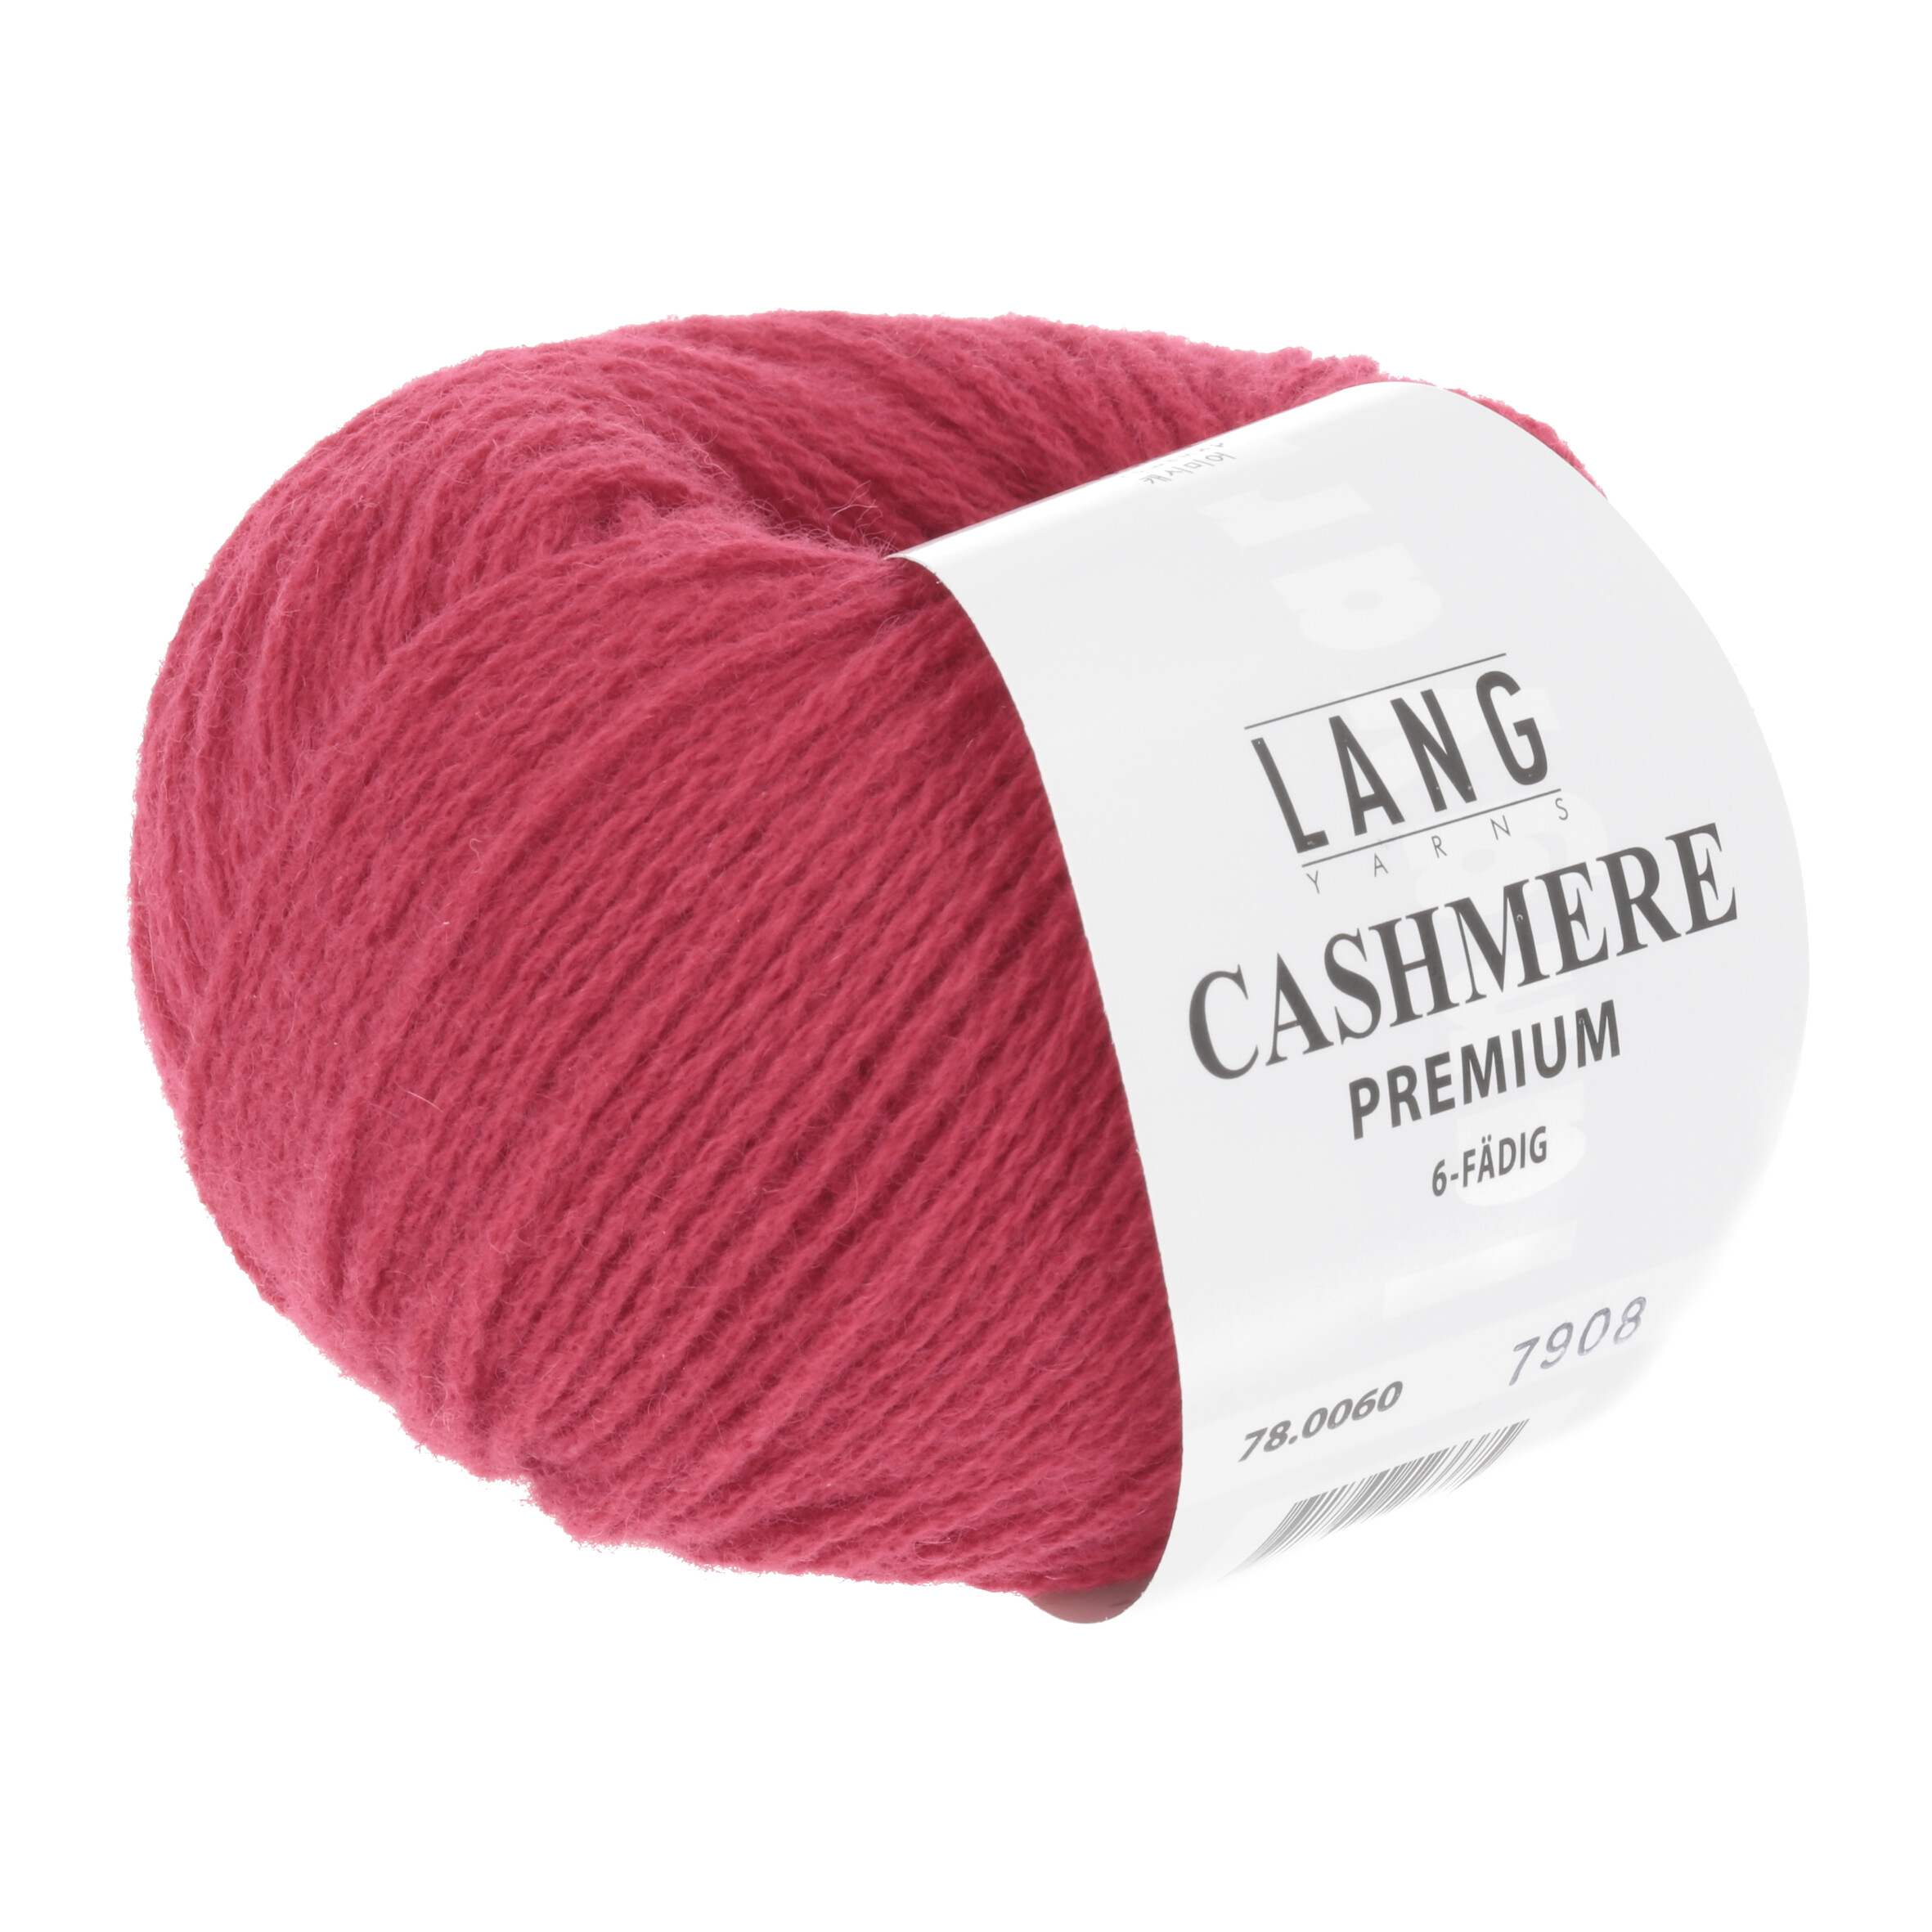 LANG Cashmere Premium 060 rot